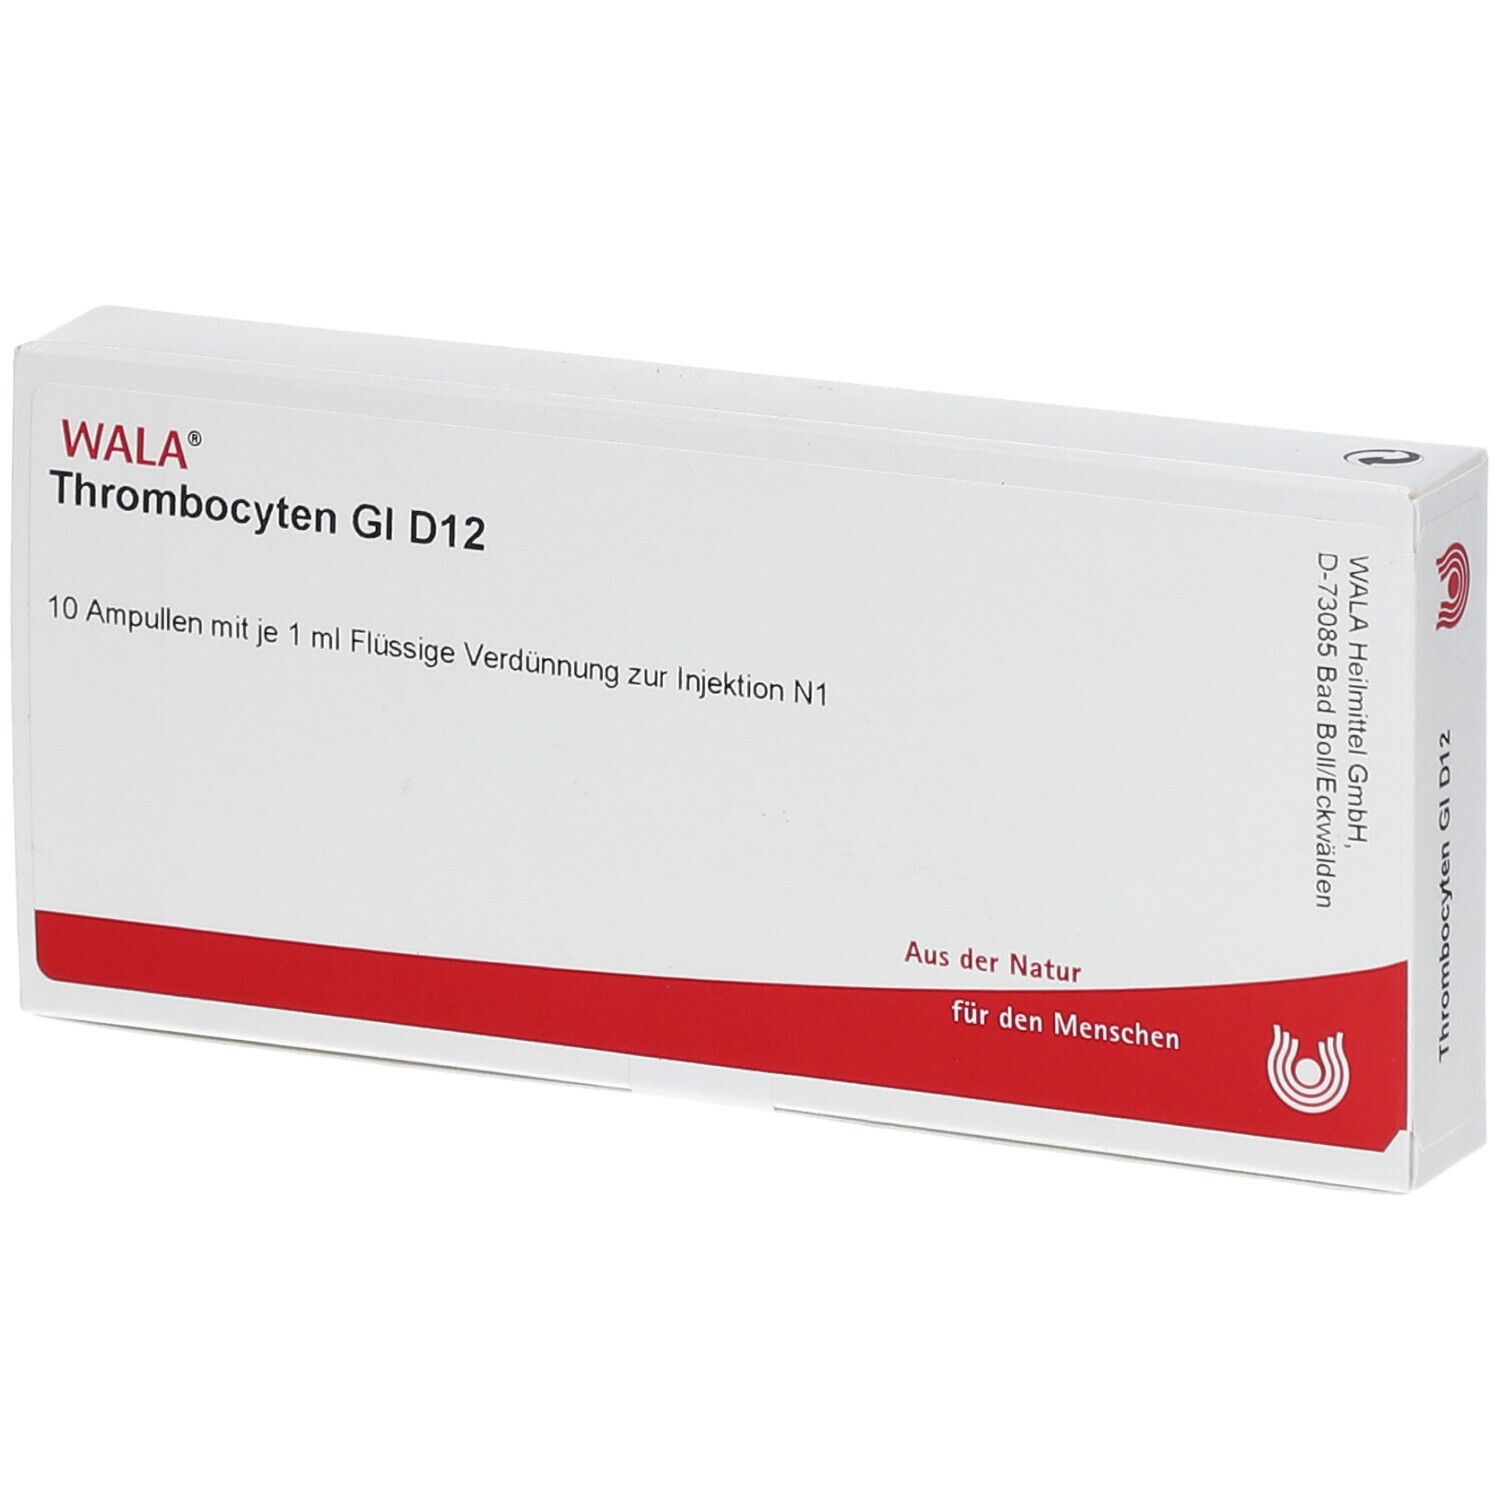 WALA® Thrombocyten Gl D 12